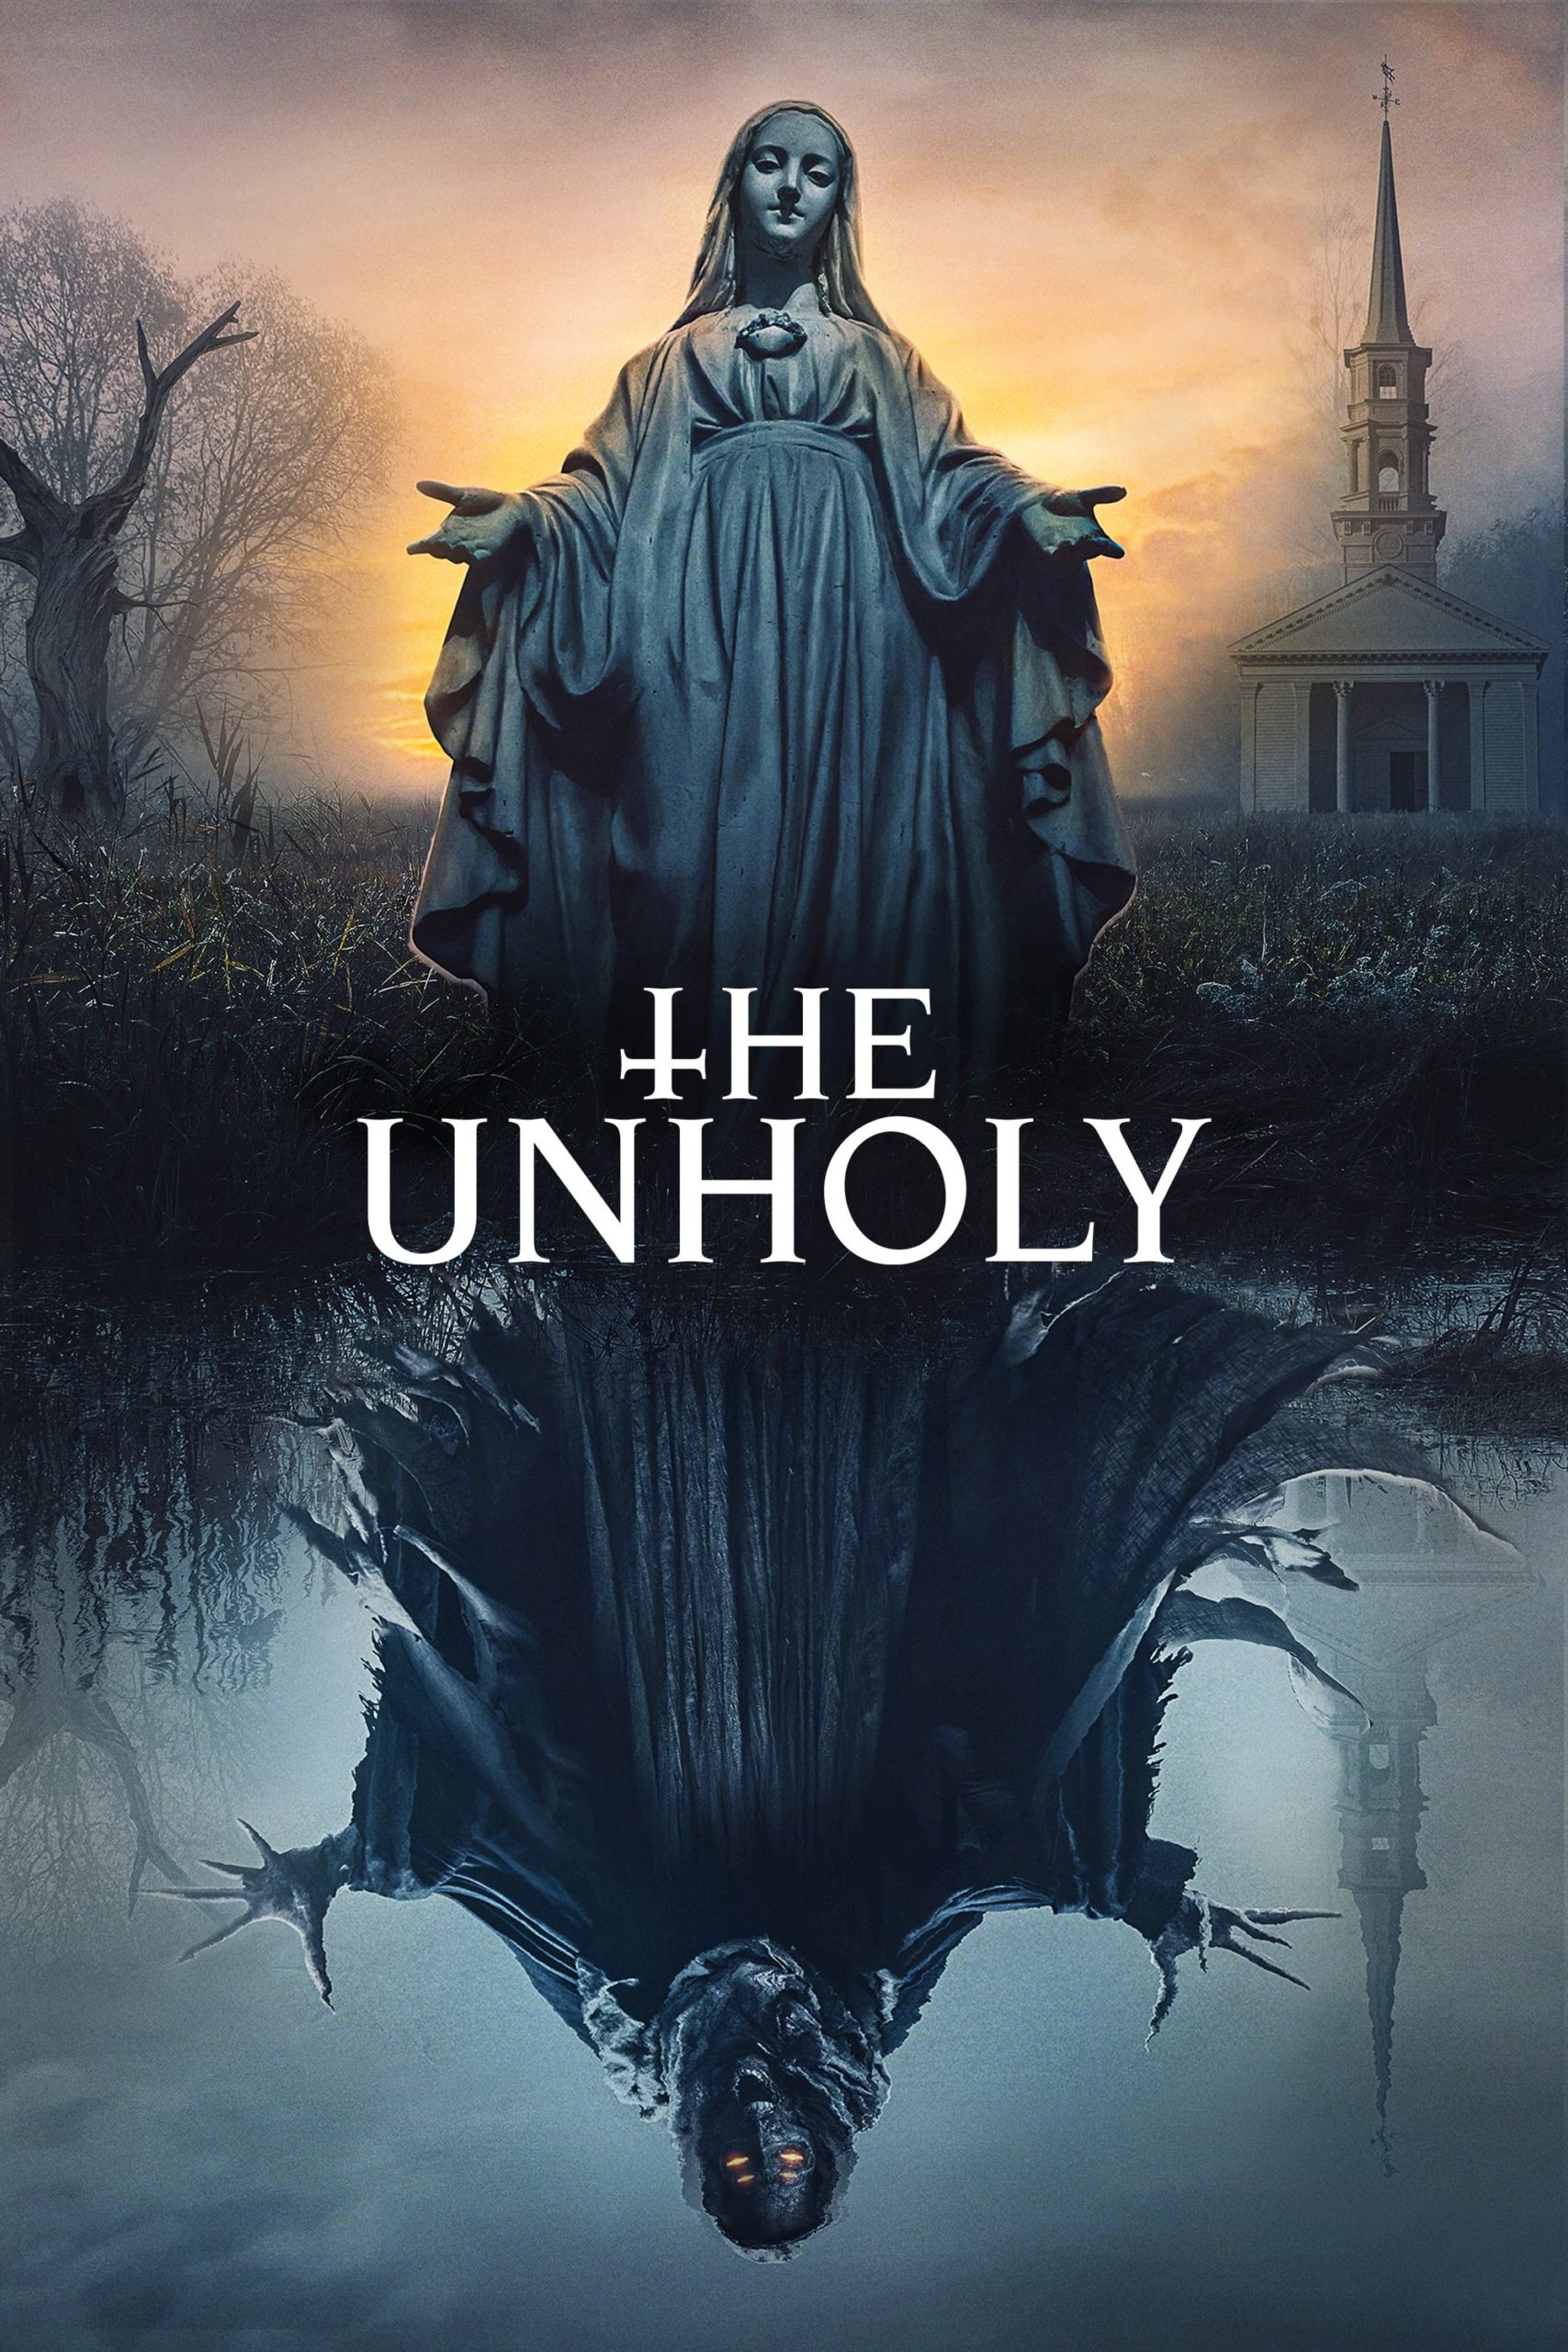 The Unholy เทวาอาถรรพ์ (2021)